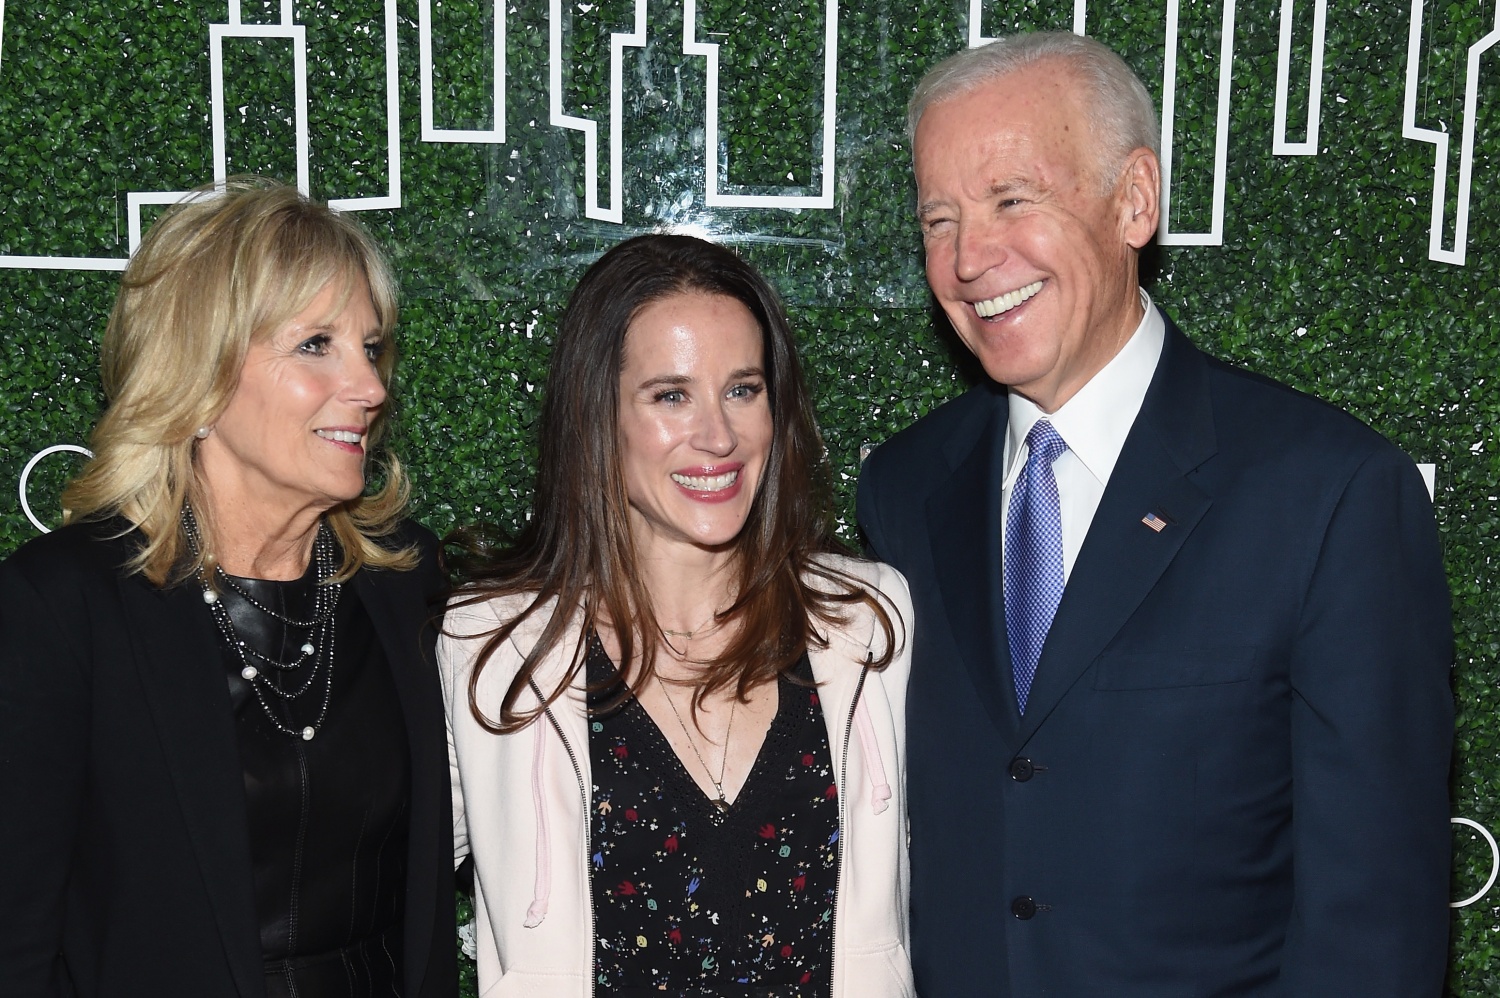 Dr. Jill Biden, Livelihood founder Ashley Biden and Vice President Joe Biden